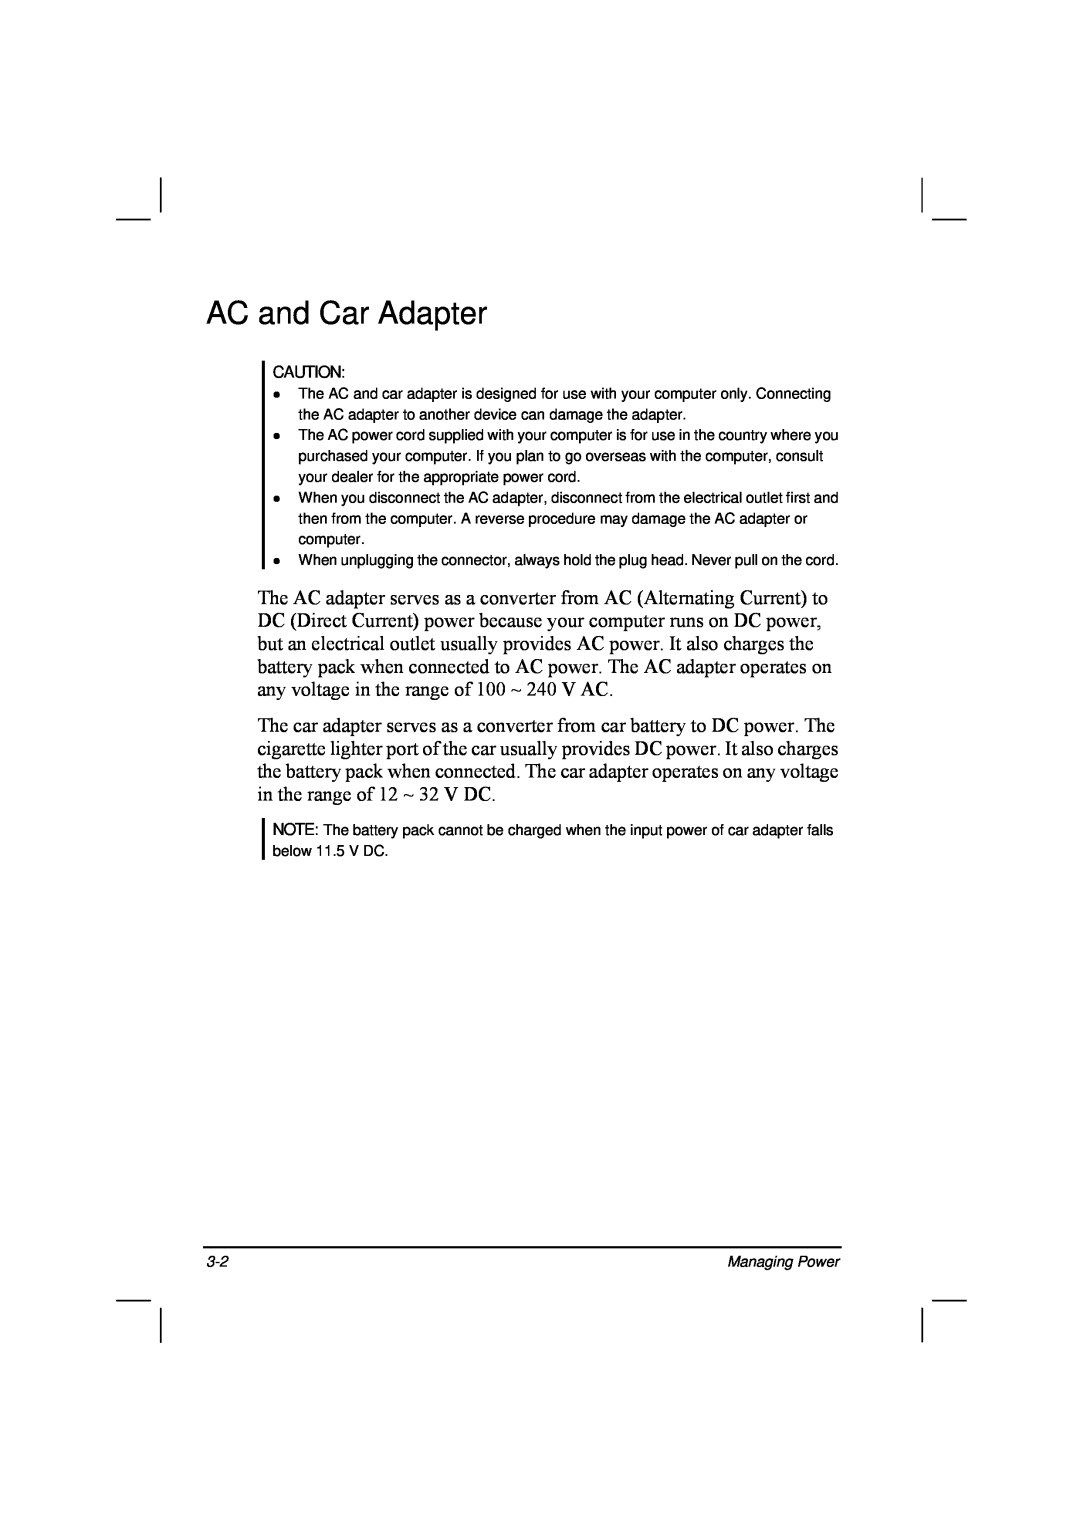 TAG 20 Series manual AC and Car Adapter, Managing Power 